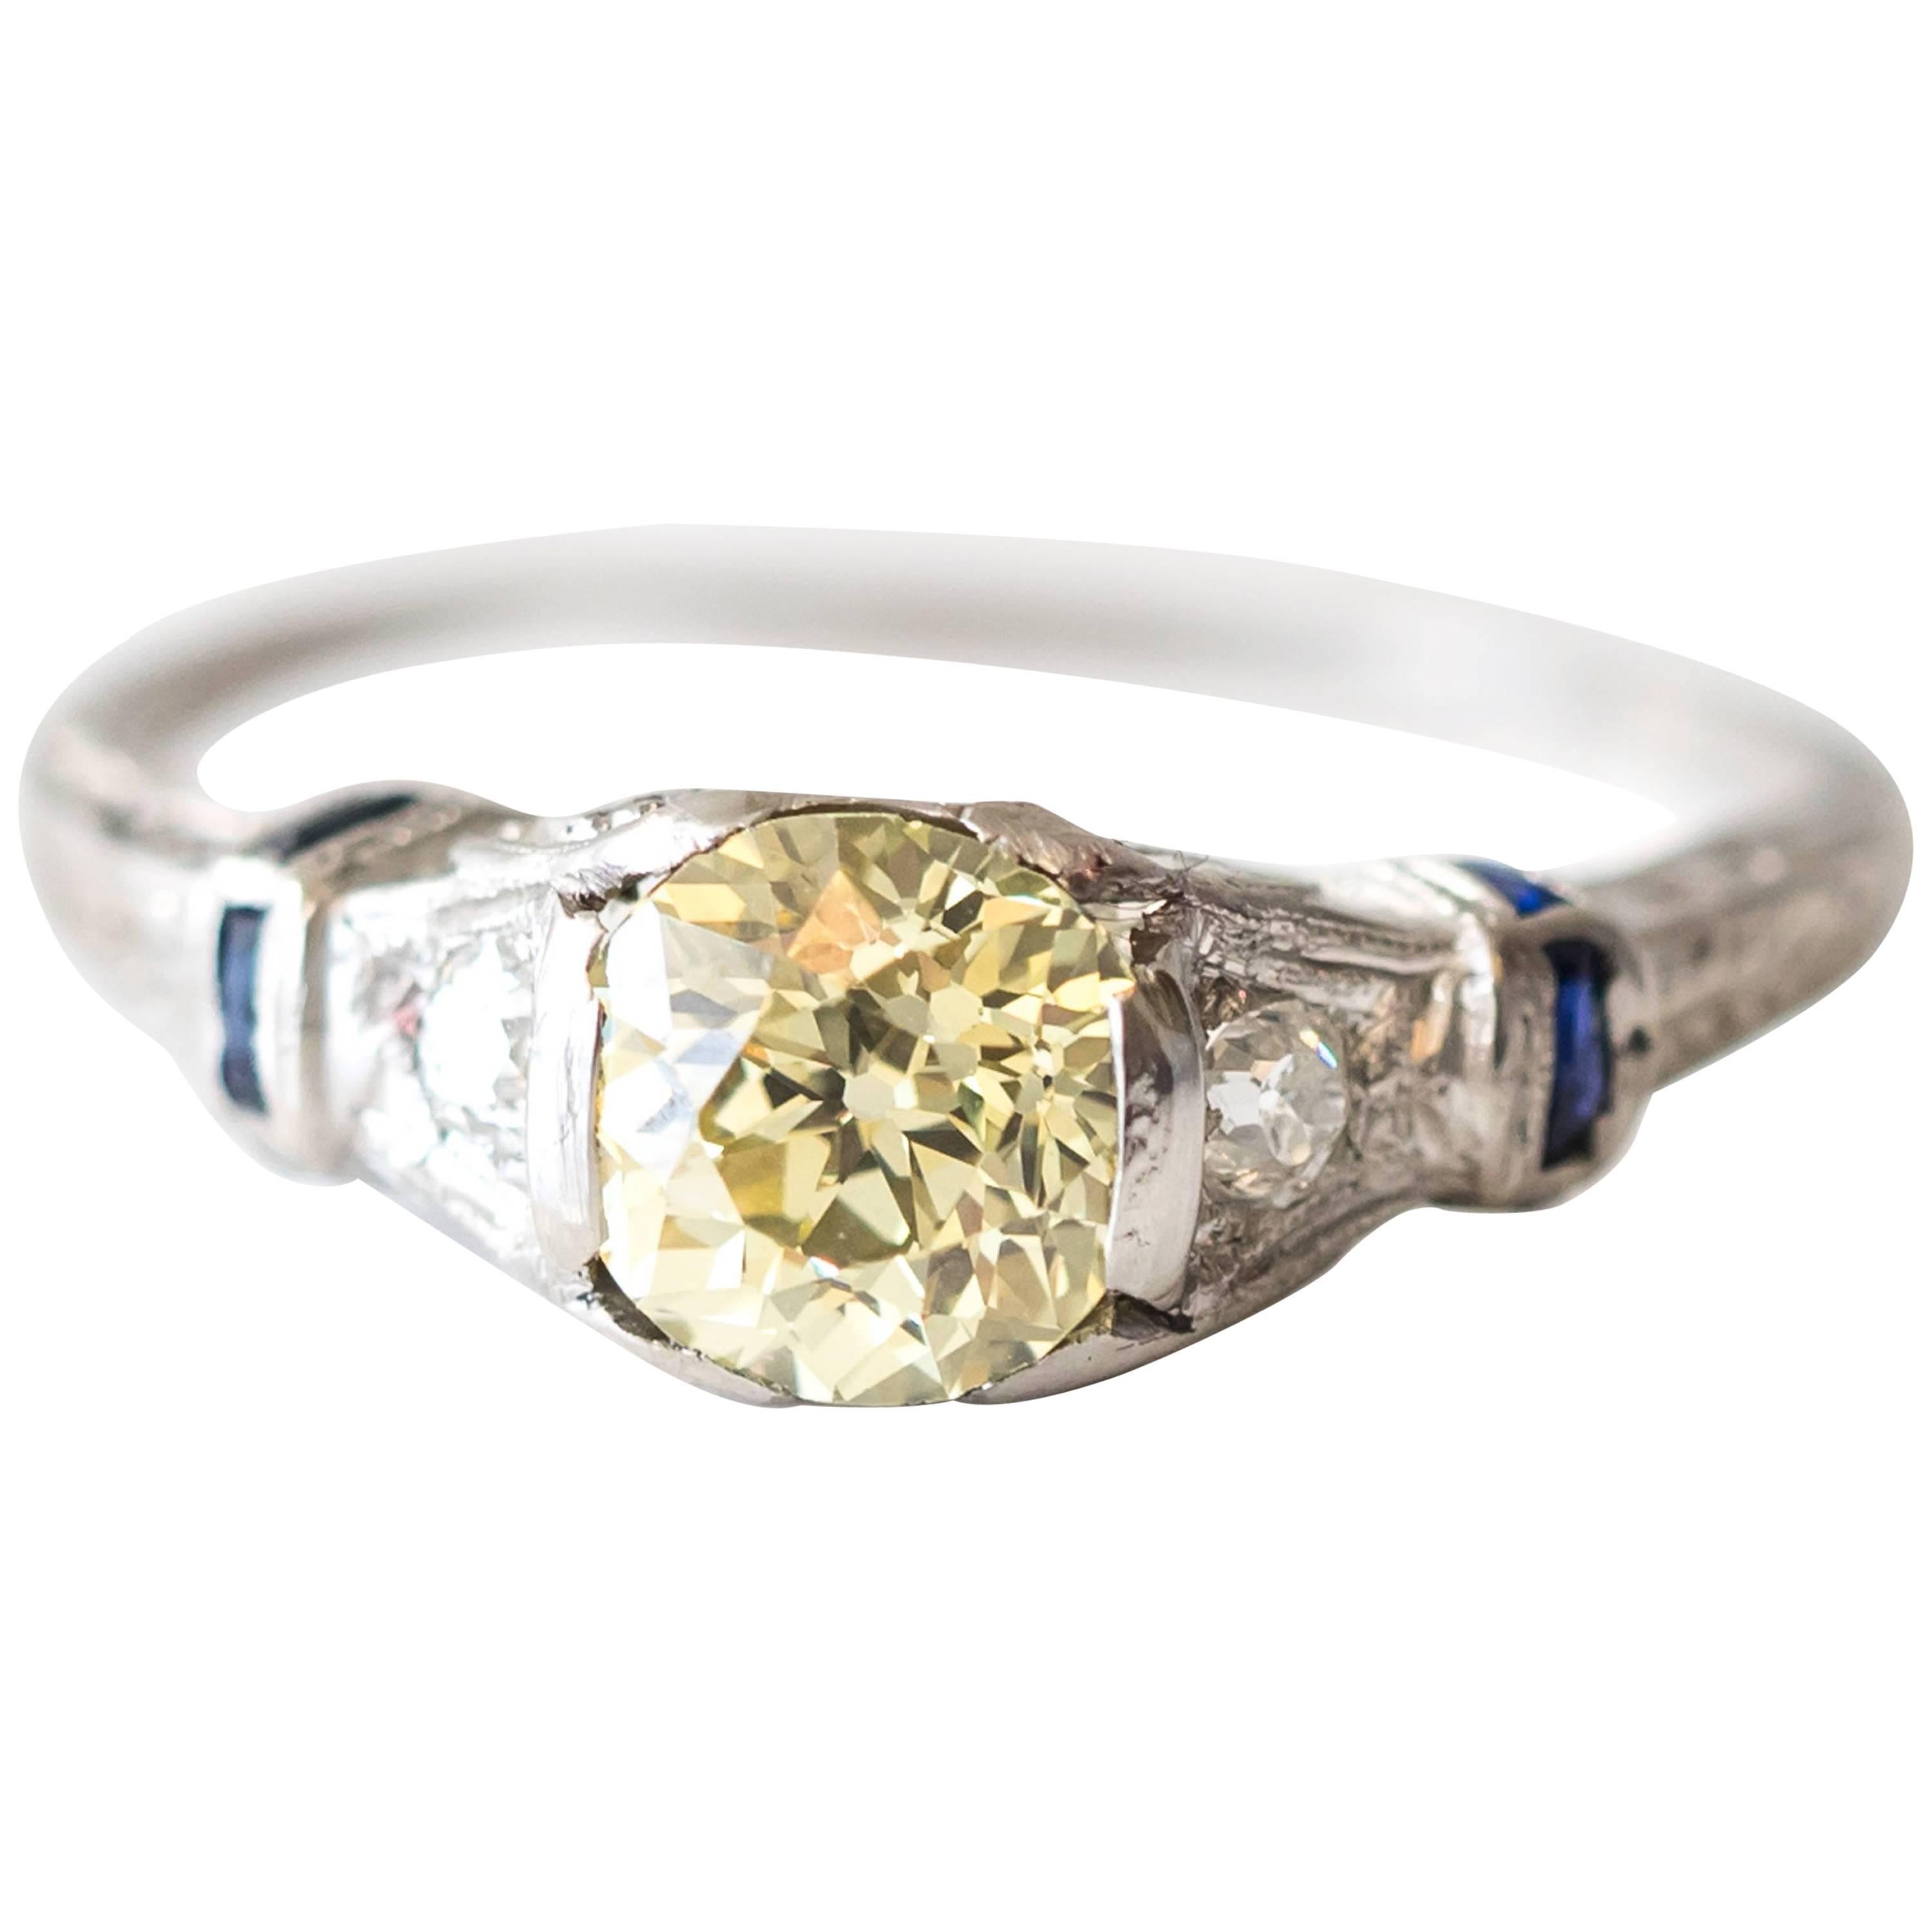 1920s Art Deco GIA Certified 1.03 Carat Fancy Yellow Diamond Platinum Ring